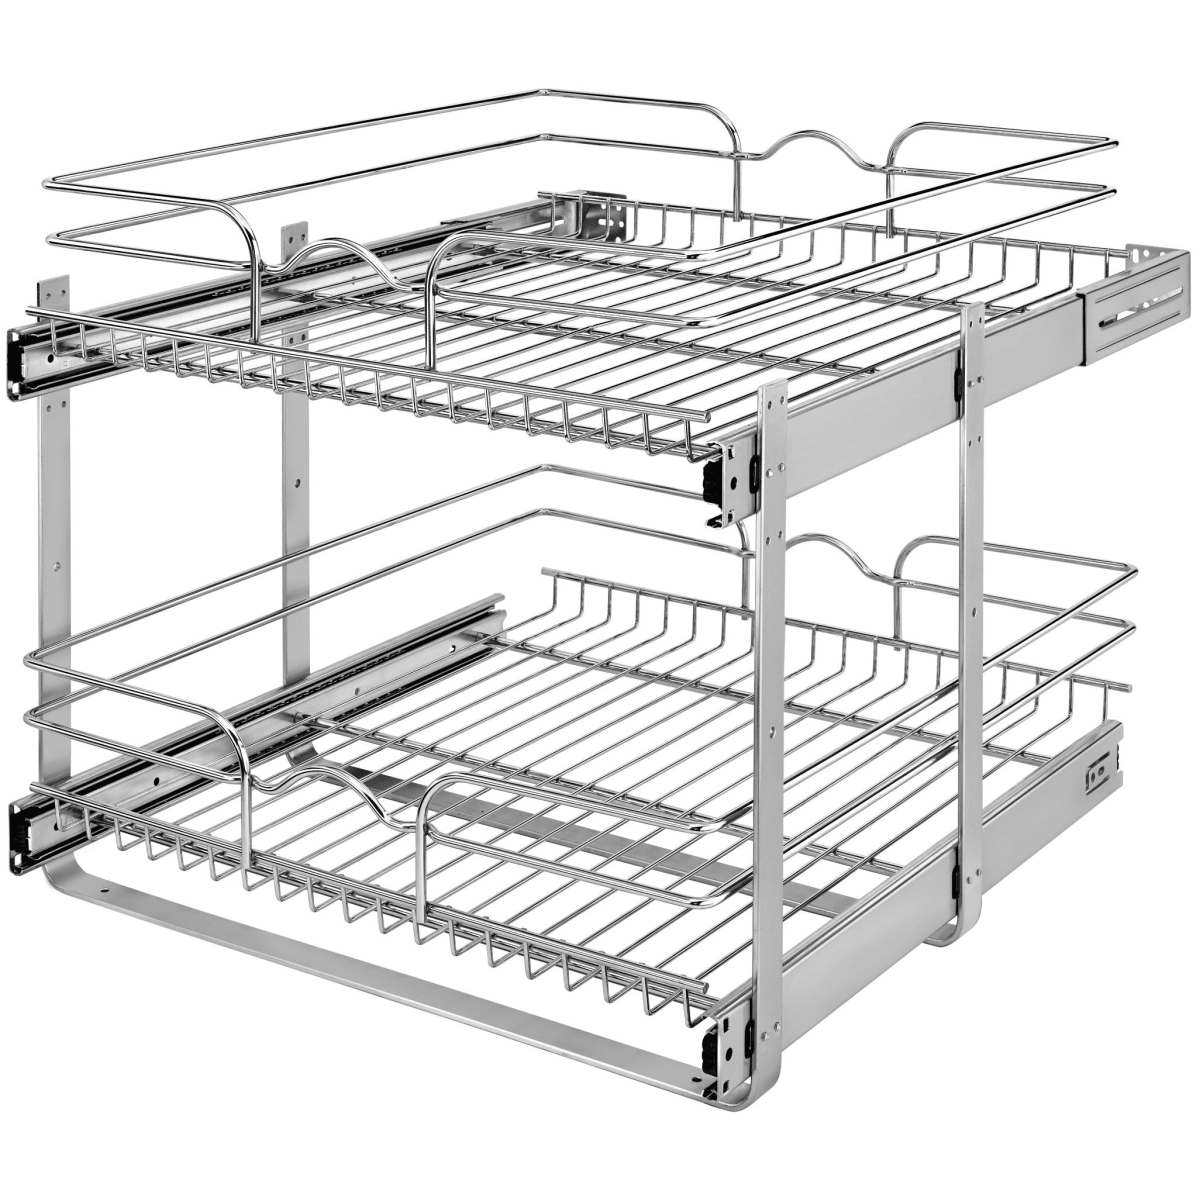 Rev-a-shelf 5wb2 2-tier Wire Basket Pull Out Shelf Storage For